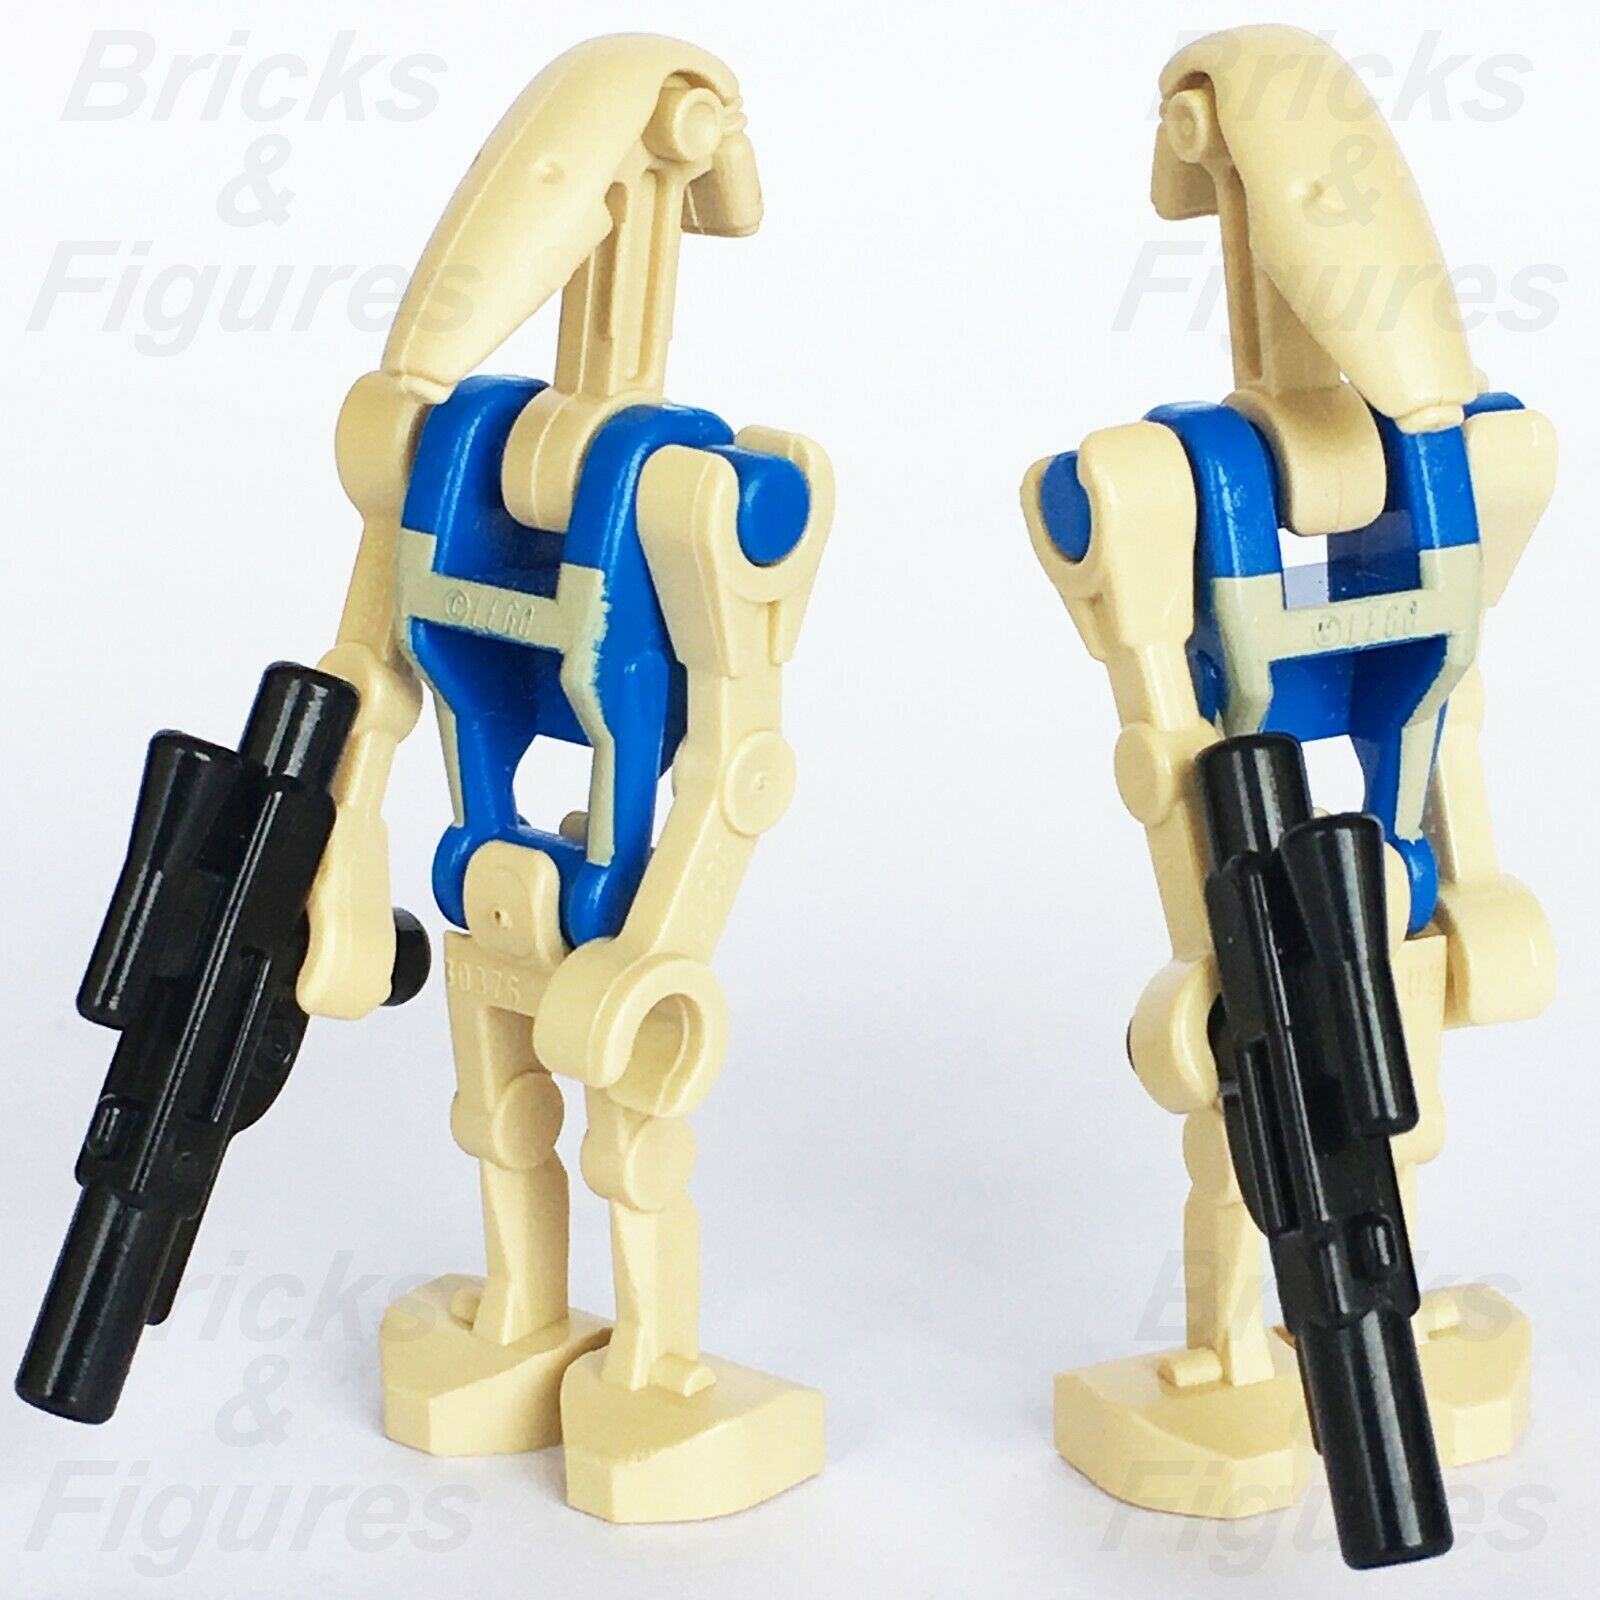 2 x New Star Wars LEGO Battle Droid Pilot Blue Minifigure 75080 75058 75041 - Bricks & Figures